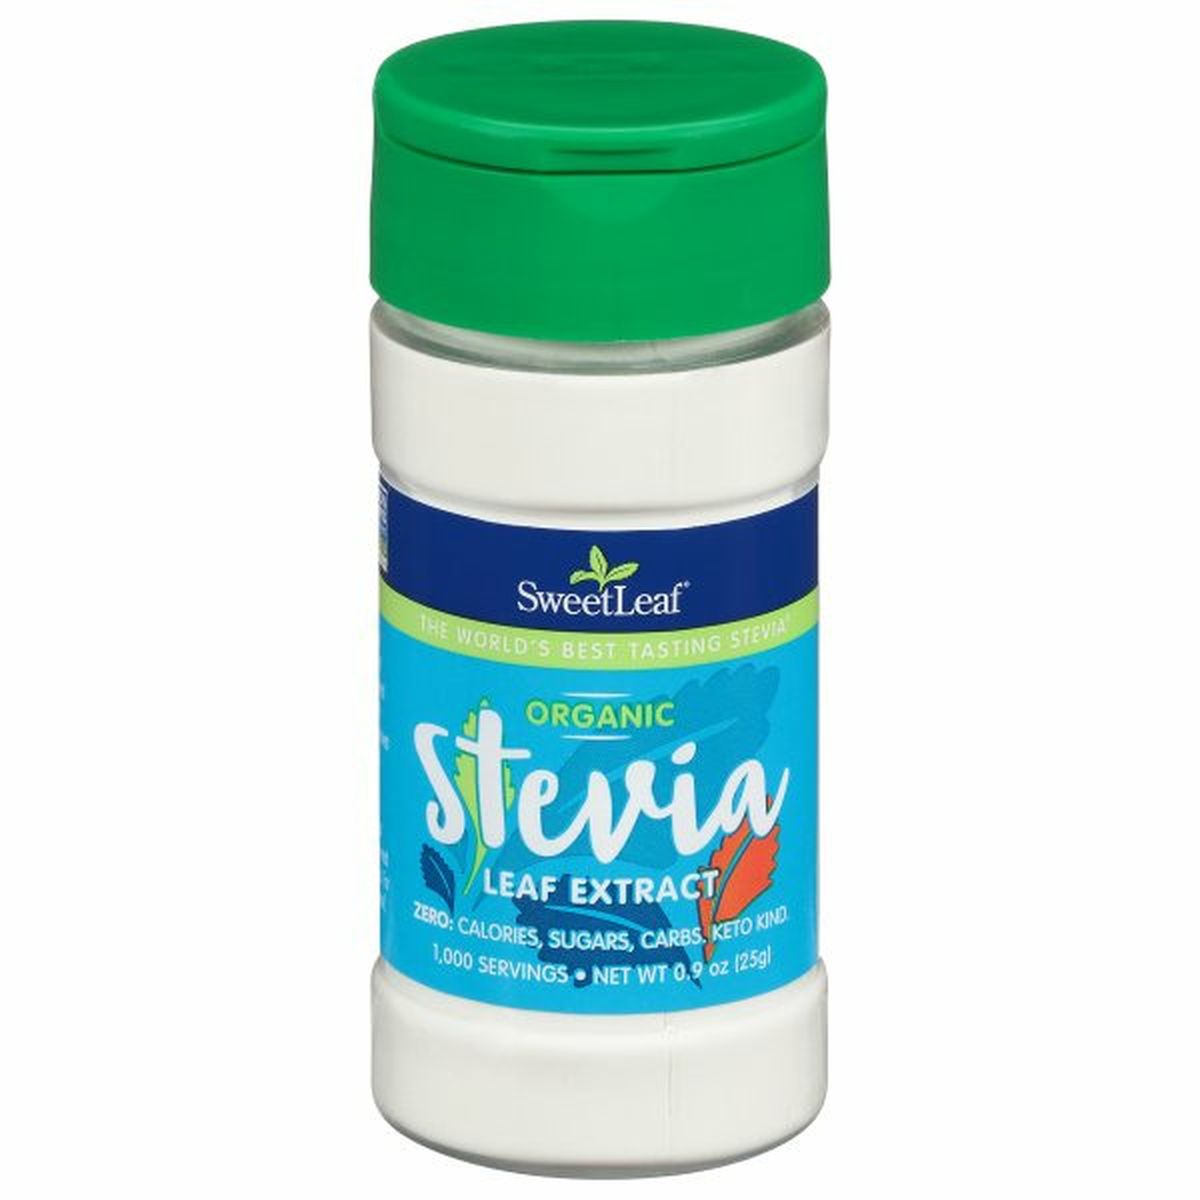 Calories in Sweet Leaf Tea Co Stevia, Organic, Leaf Extract